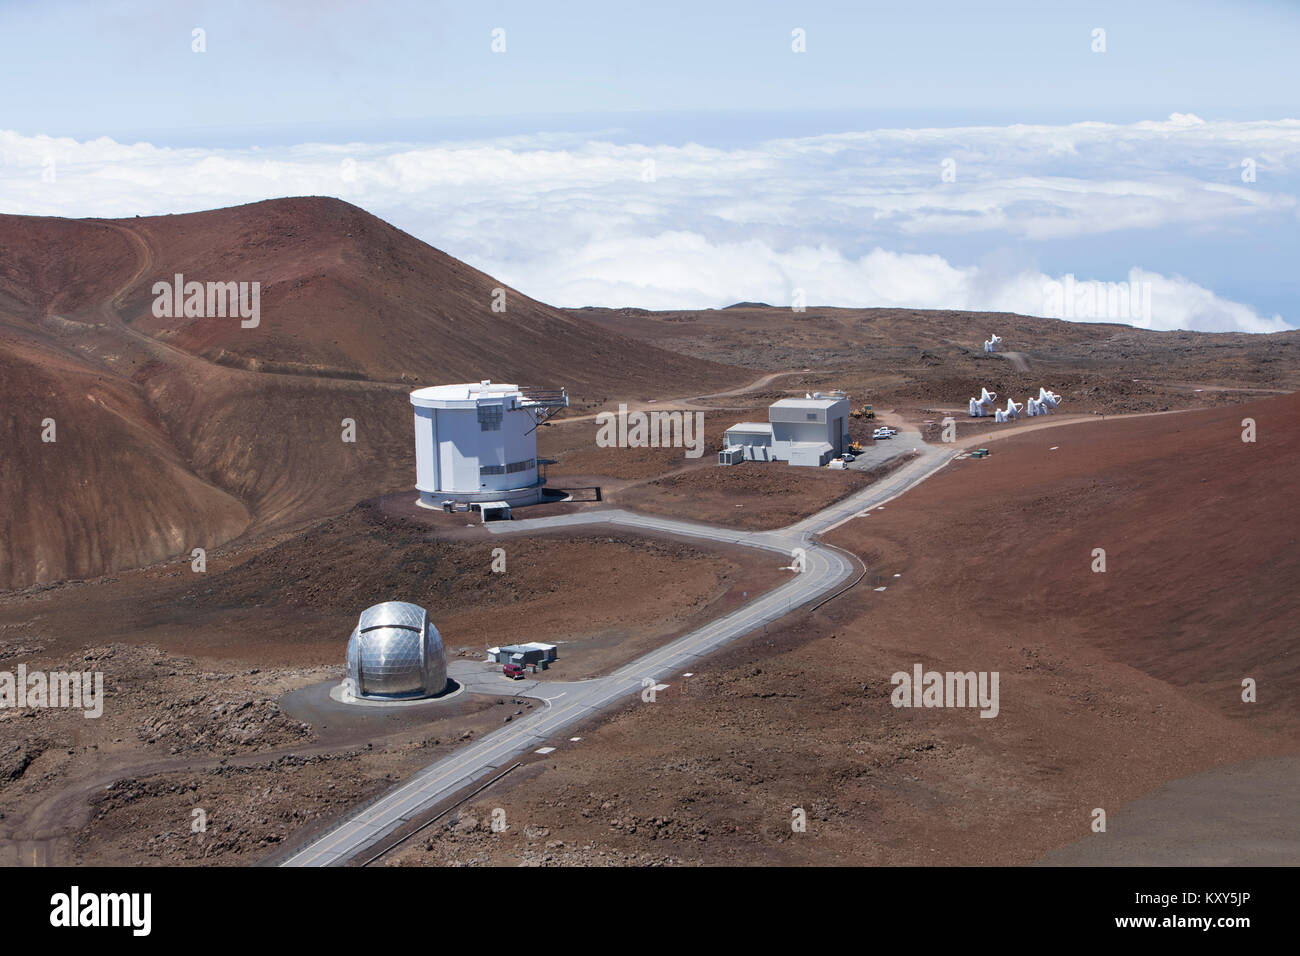 Mauna Kea observatory Telescope Hawaii. MKO, astronomical research facilities. NASA international. Science, exploration and education. Stock Photo